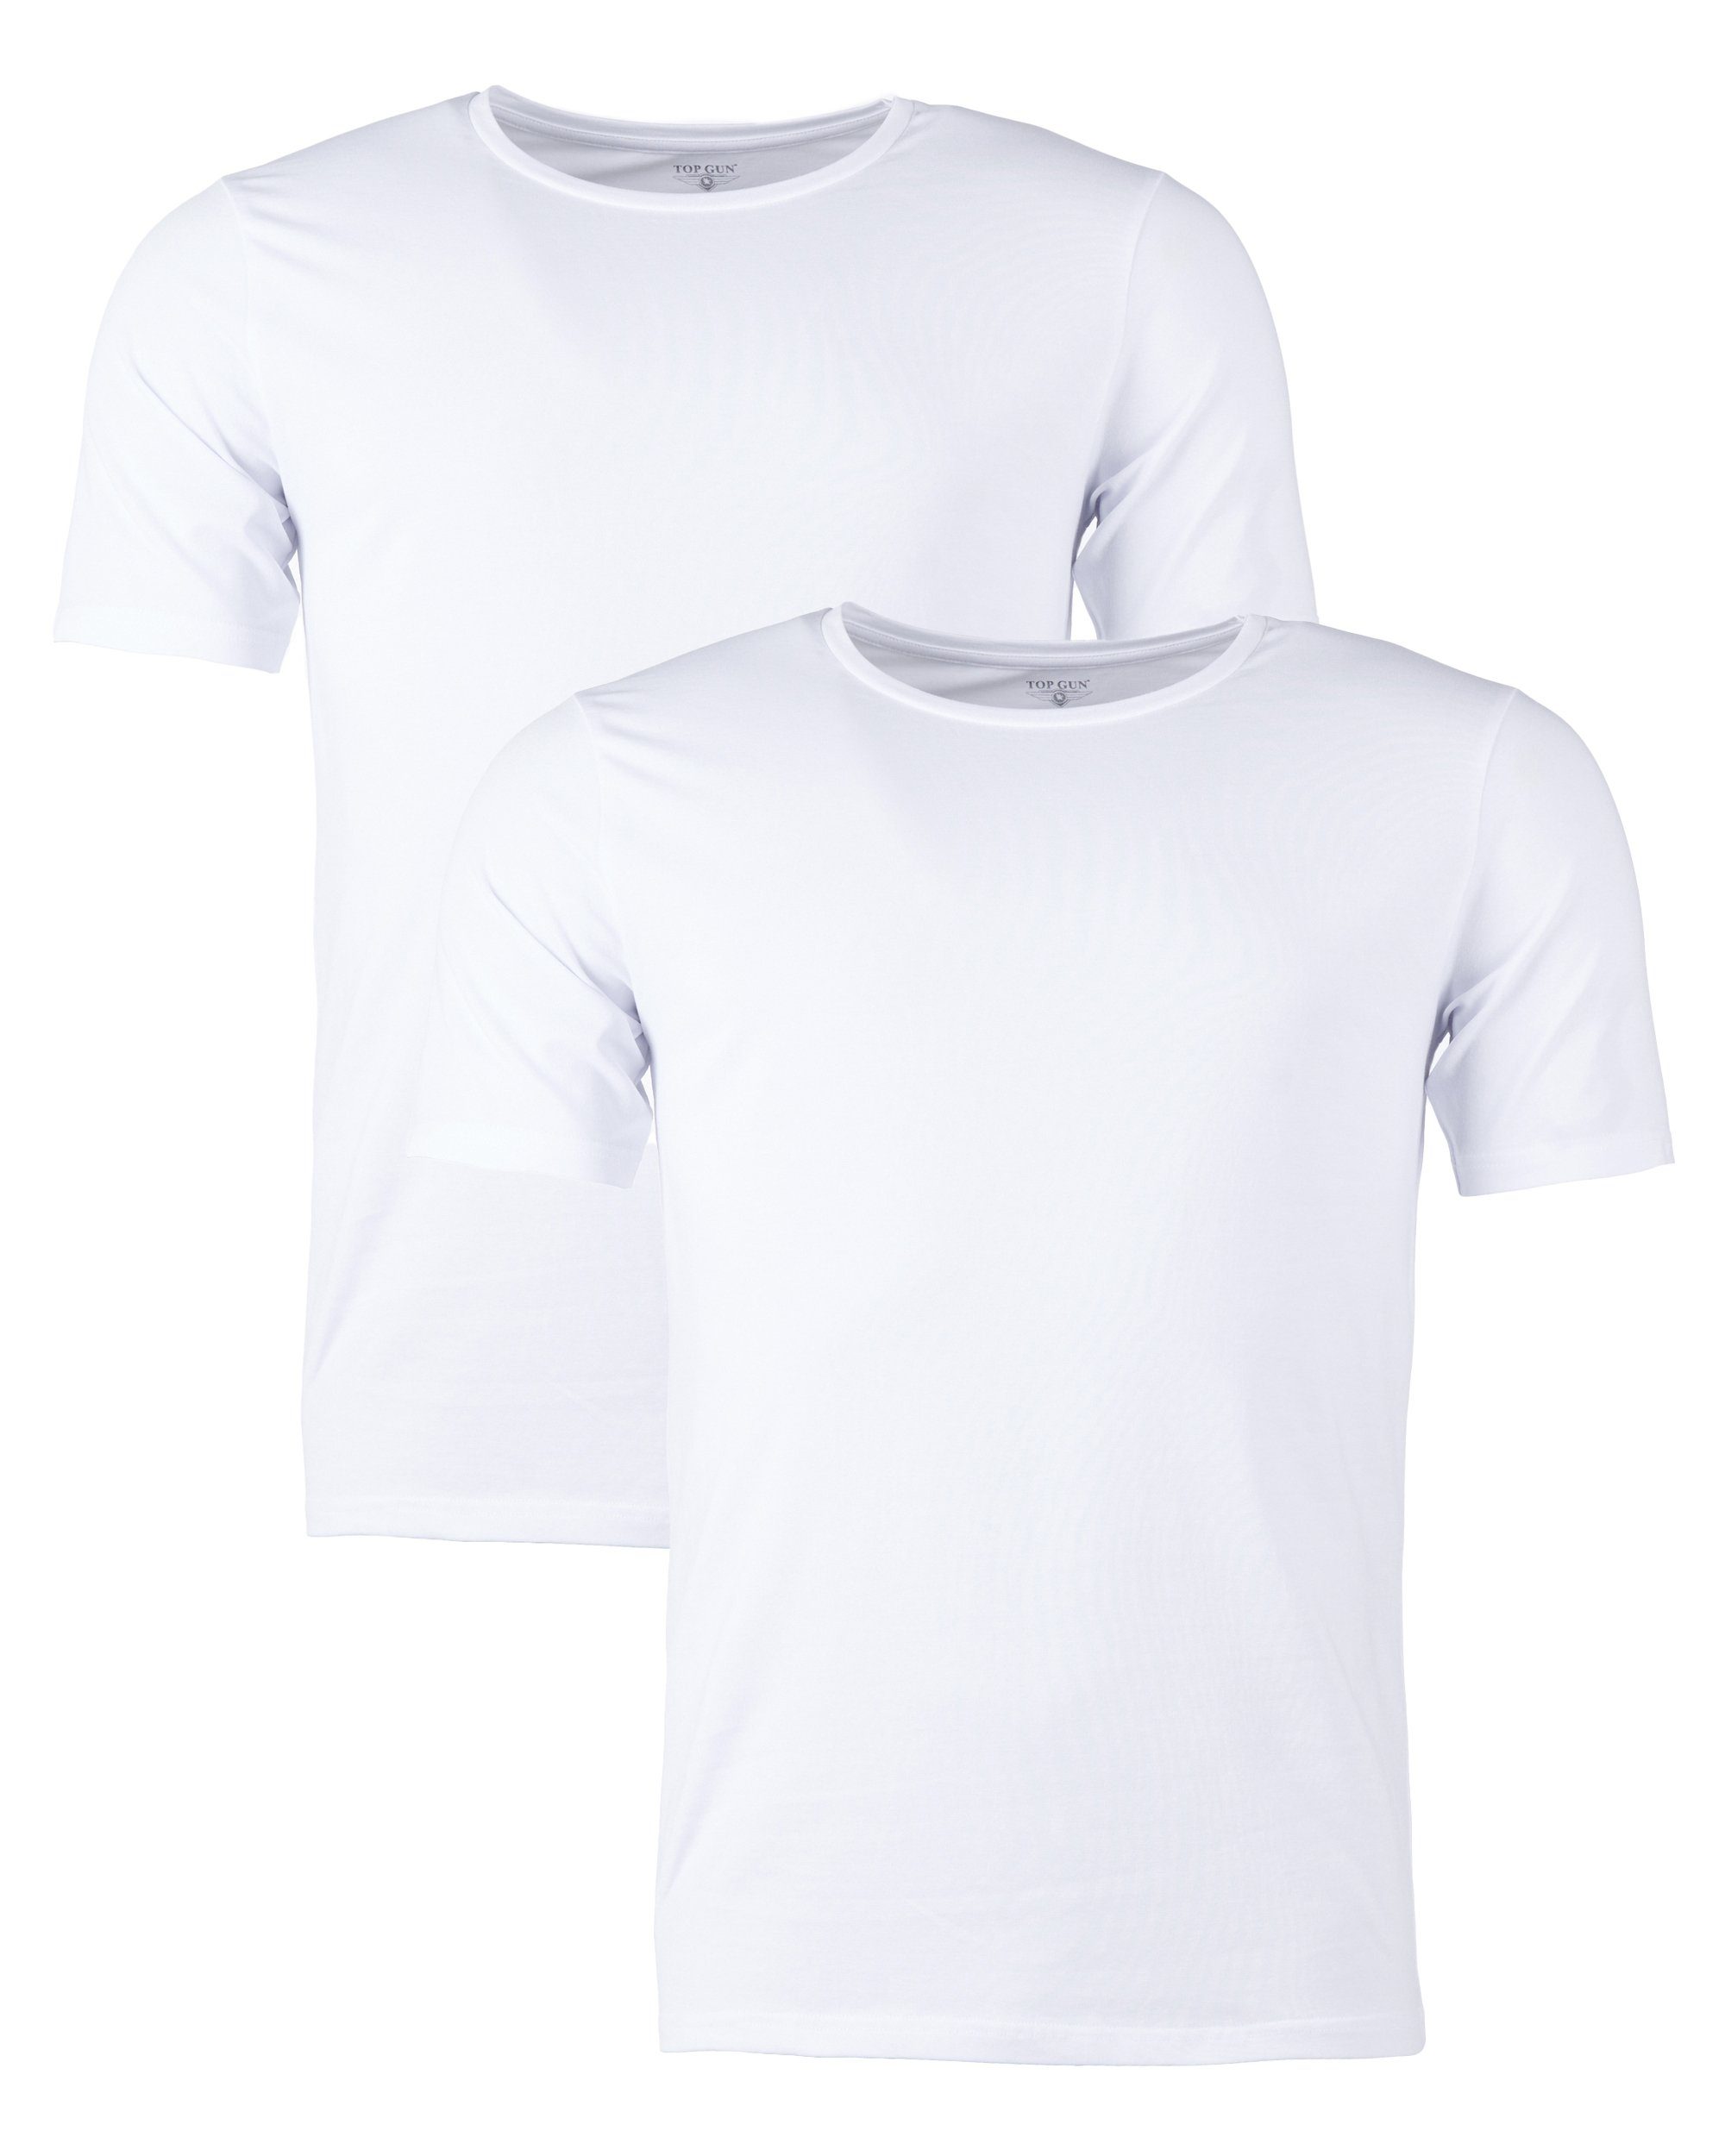 TOP GUN T-Shirt TGUW003 white